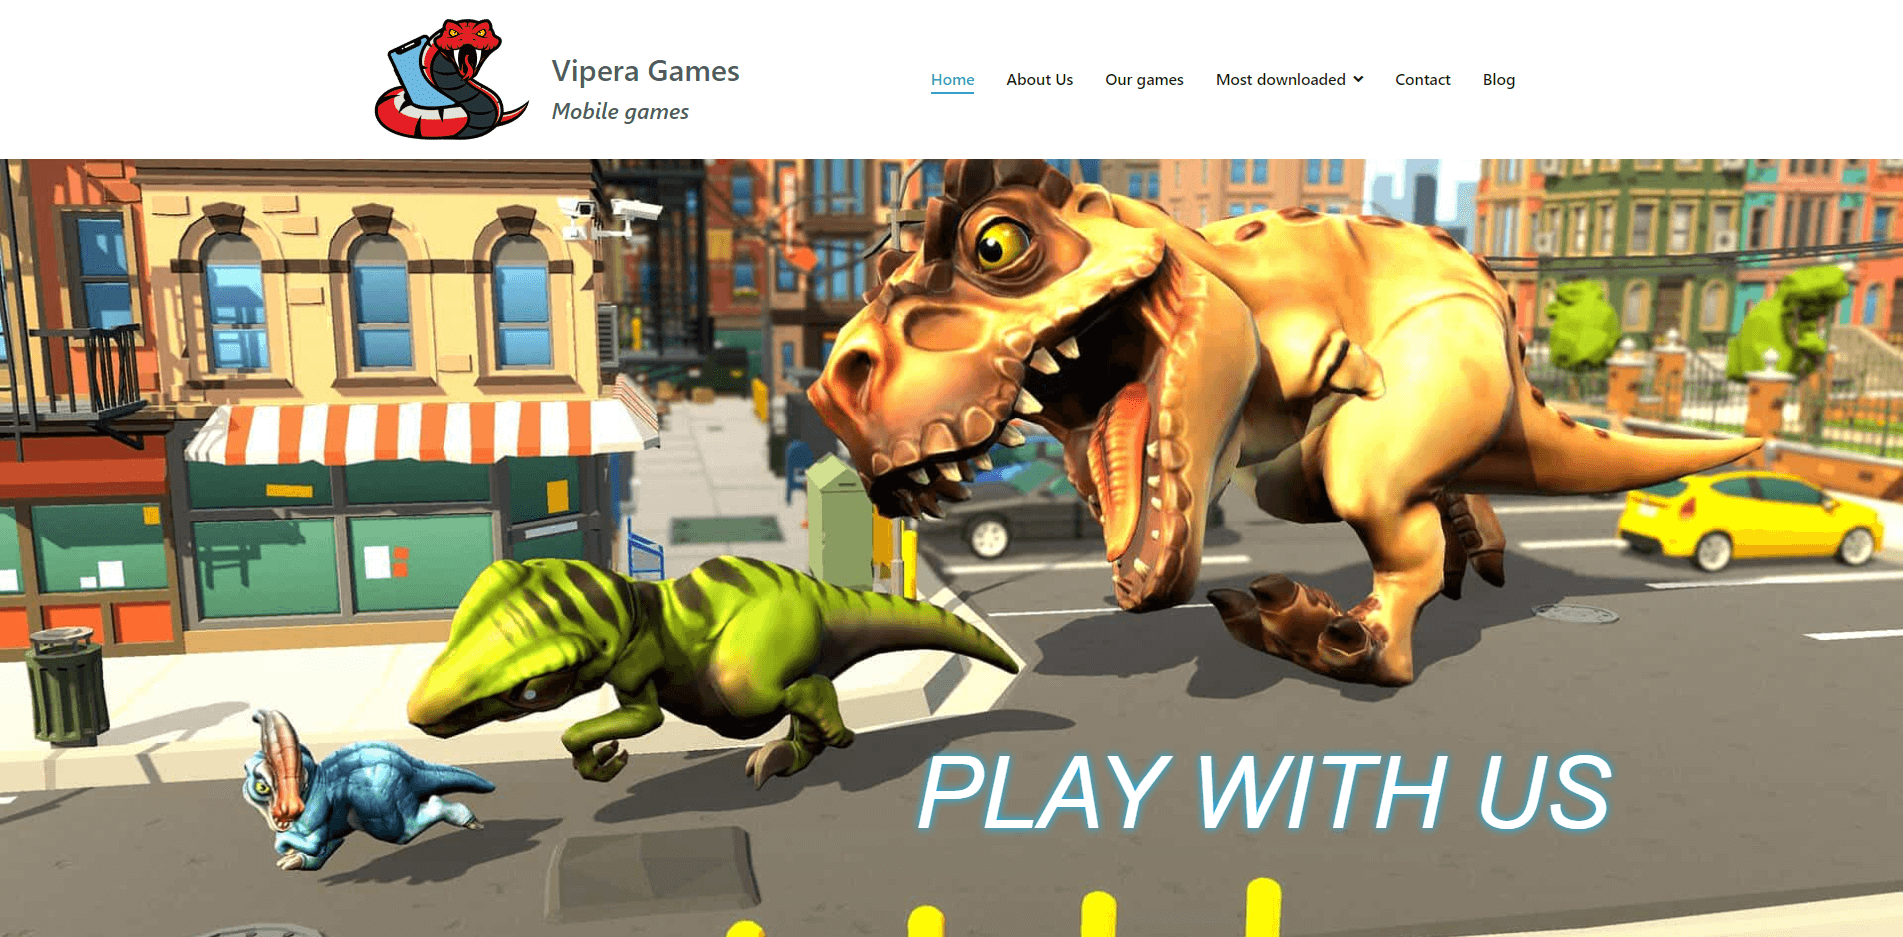 Projekt - Vipera.Games - Realizacje - Pro web developer.pl